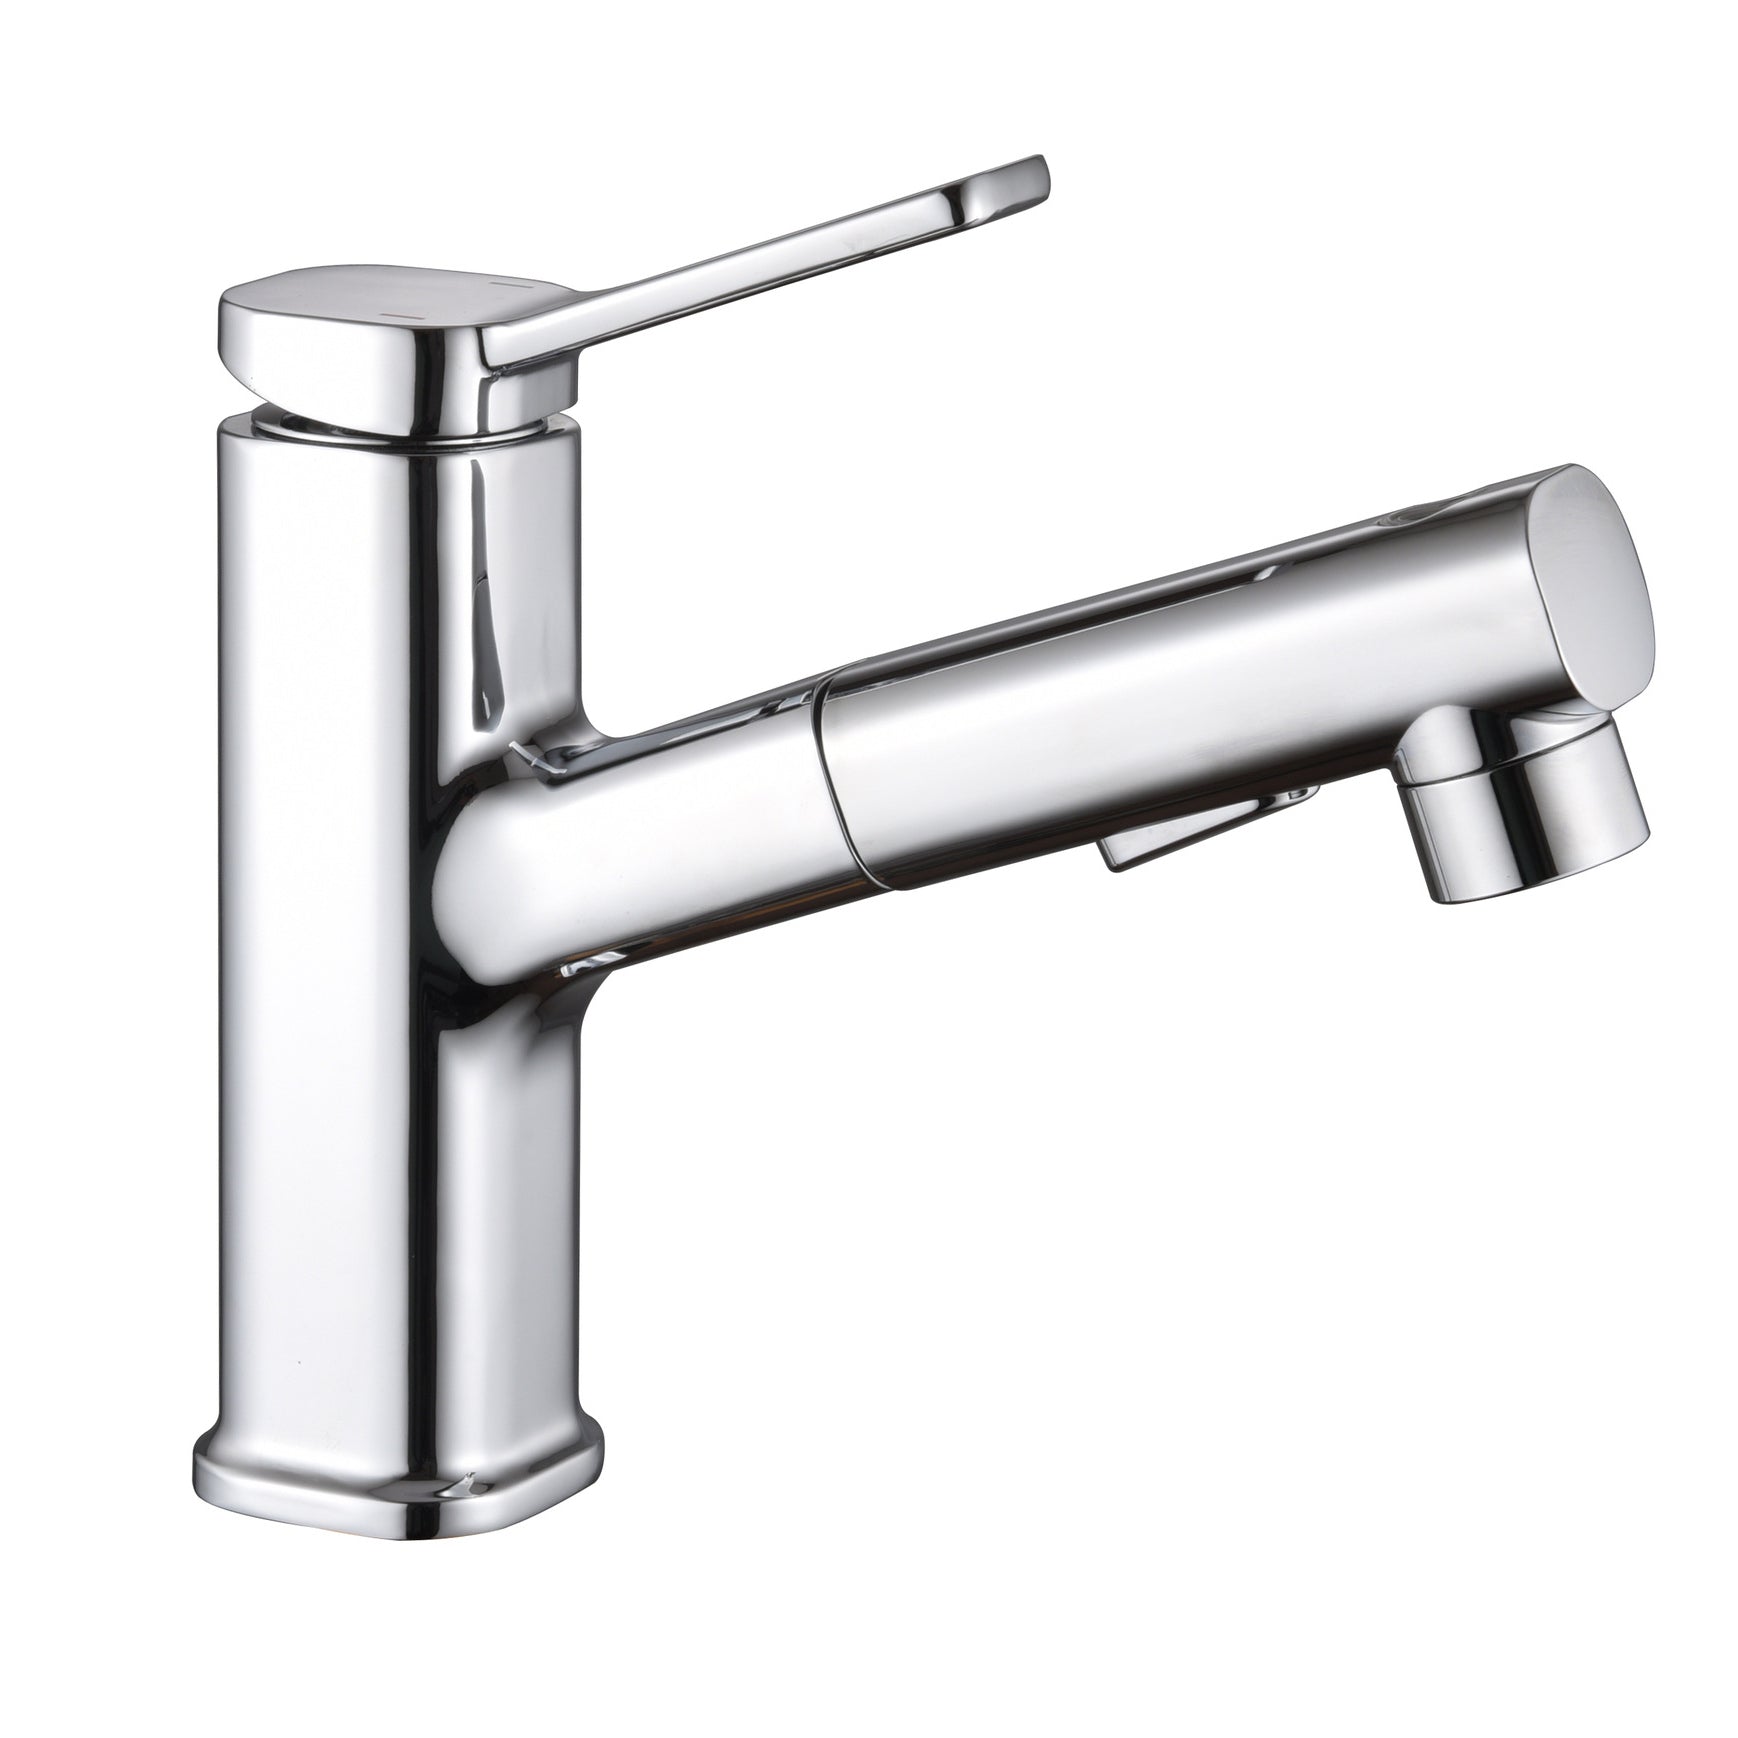 Vessel Sink Faucet Contemporary Single Lever Handle Faucet for Bathroom